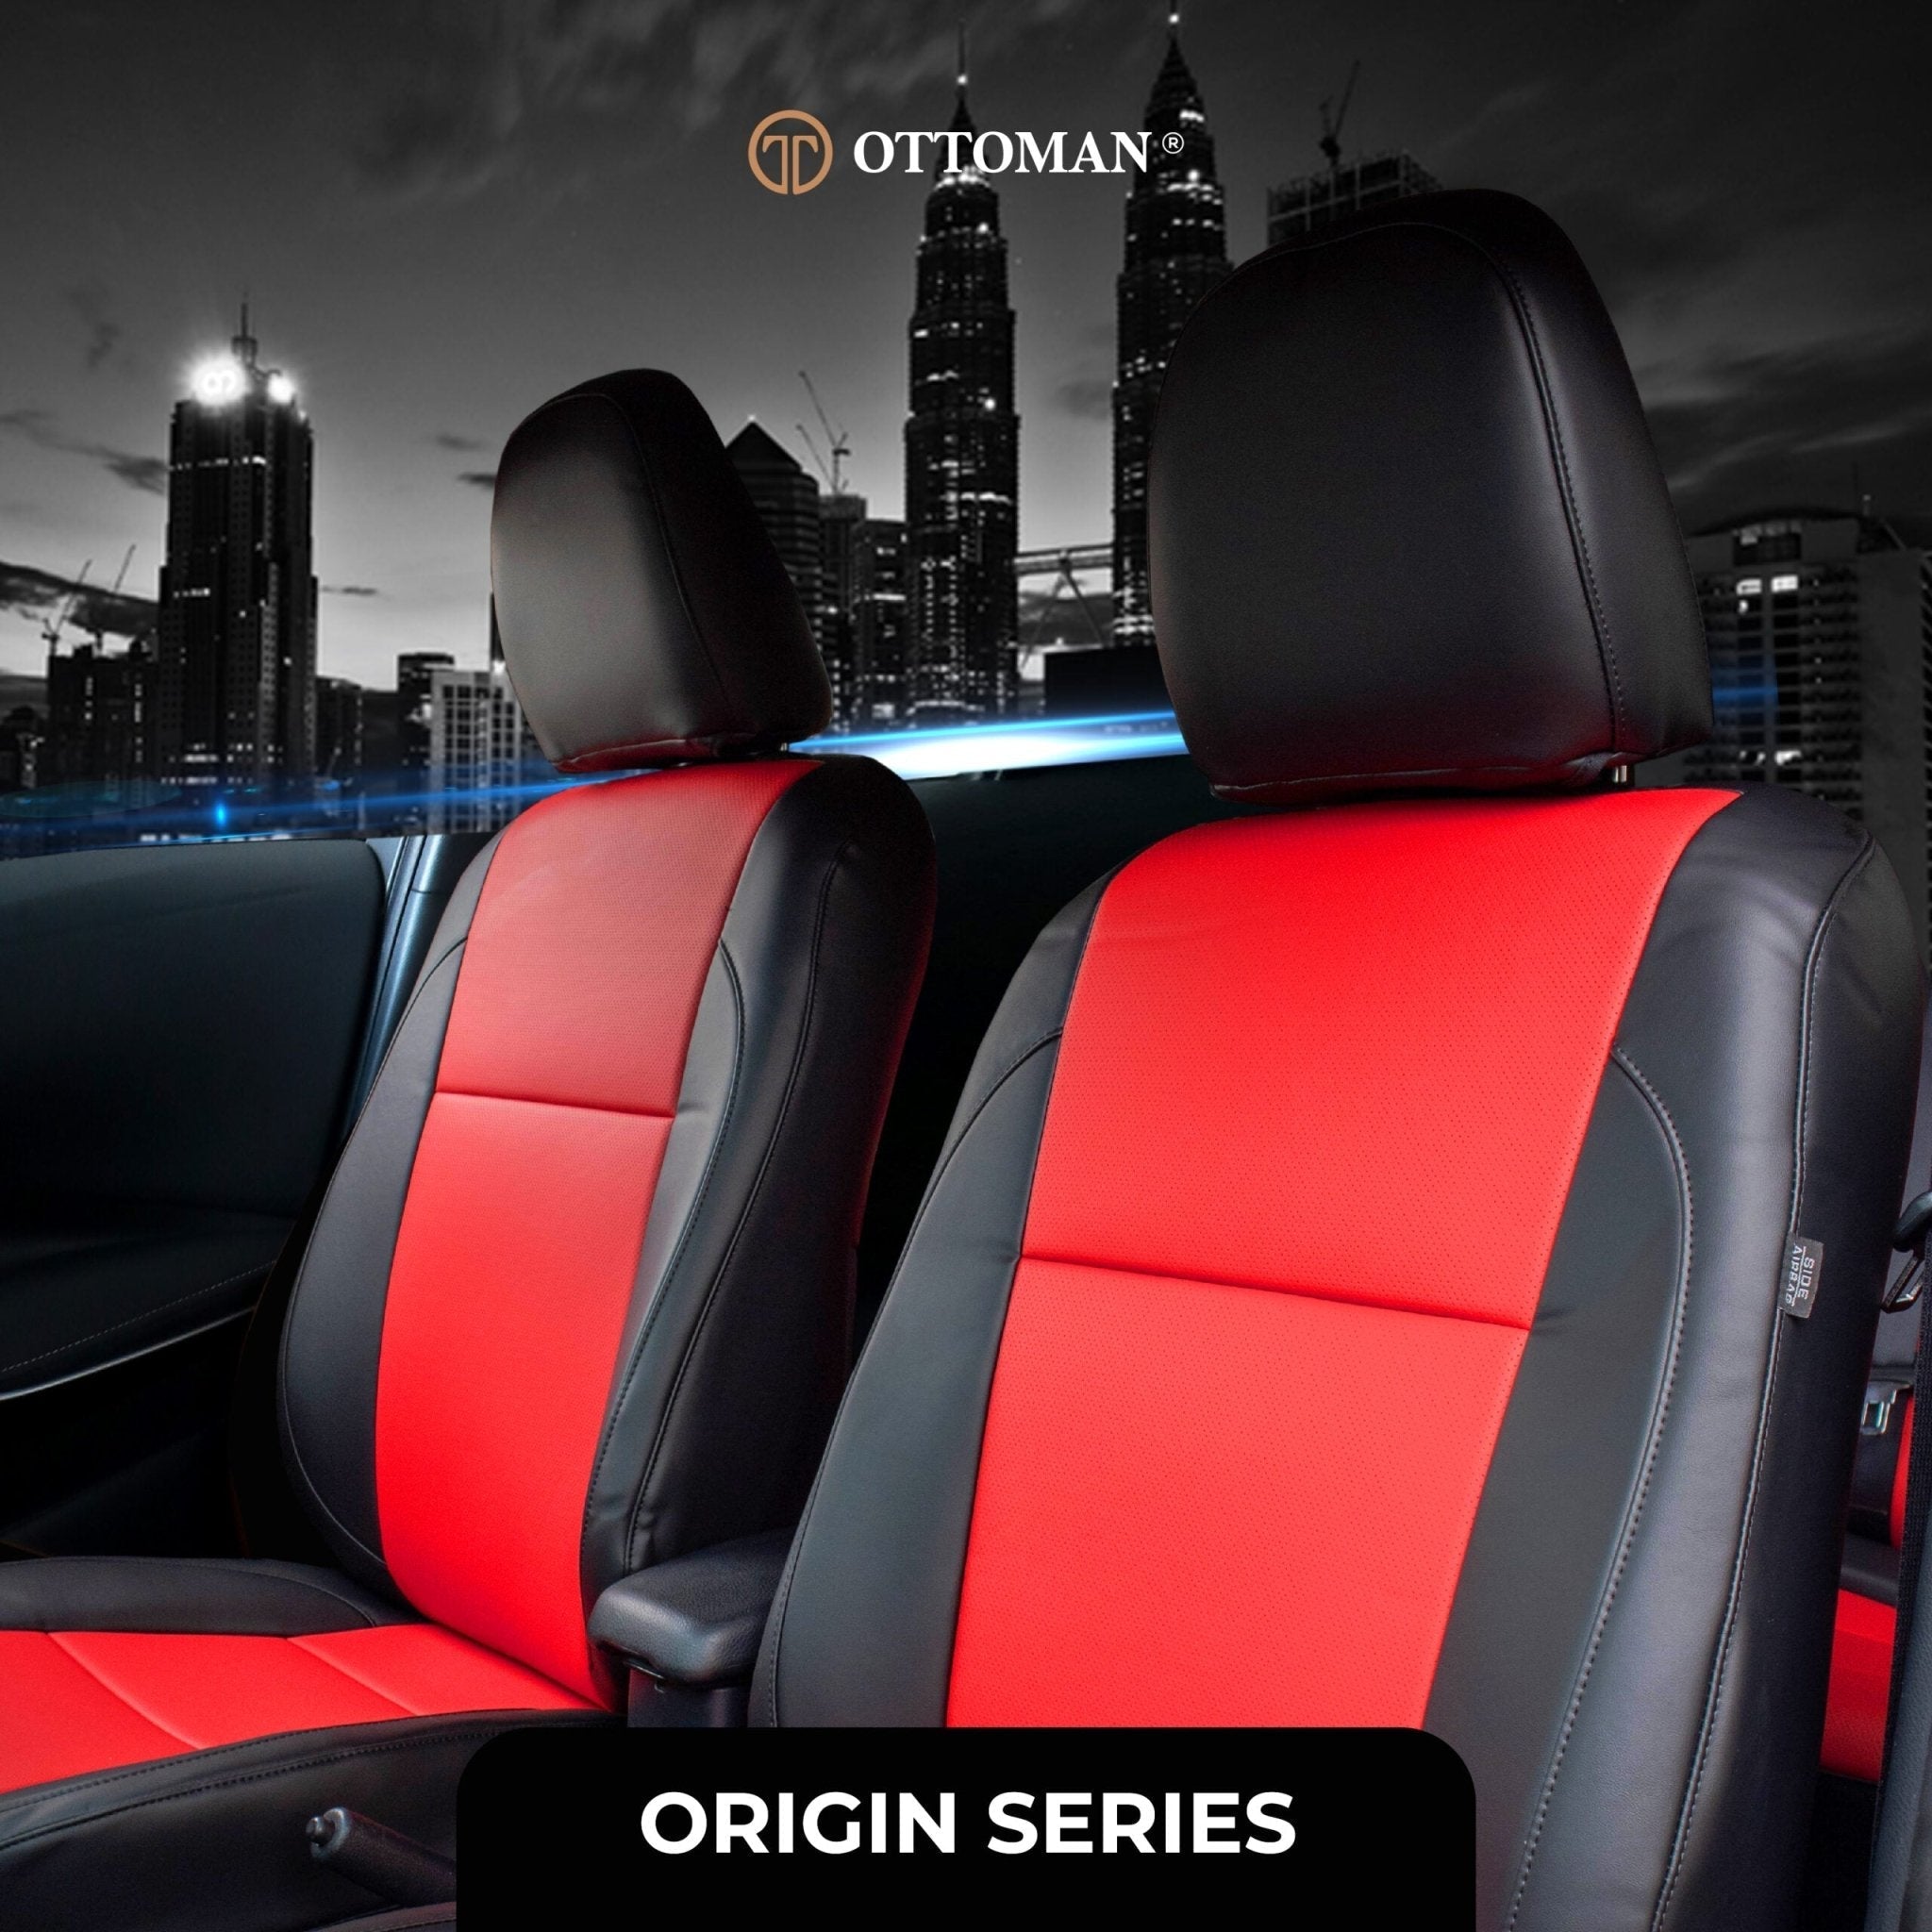 Honda Jazz (2014-Present) Ottoman Seat Cover Seat Cover in Klang Selangor, Penang, Johor Bahru - Ottoman Car Mats